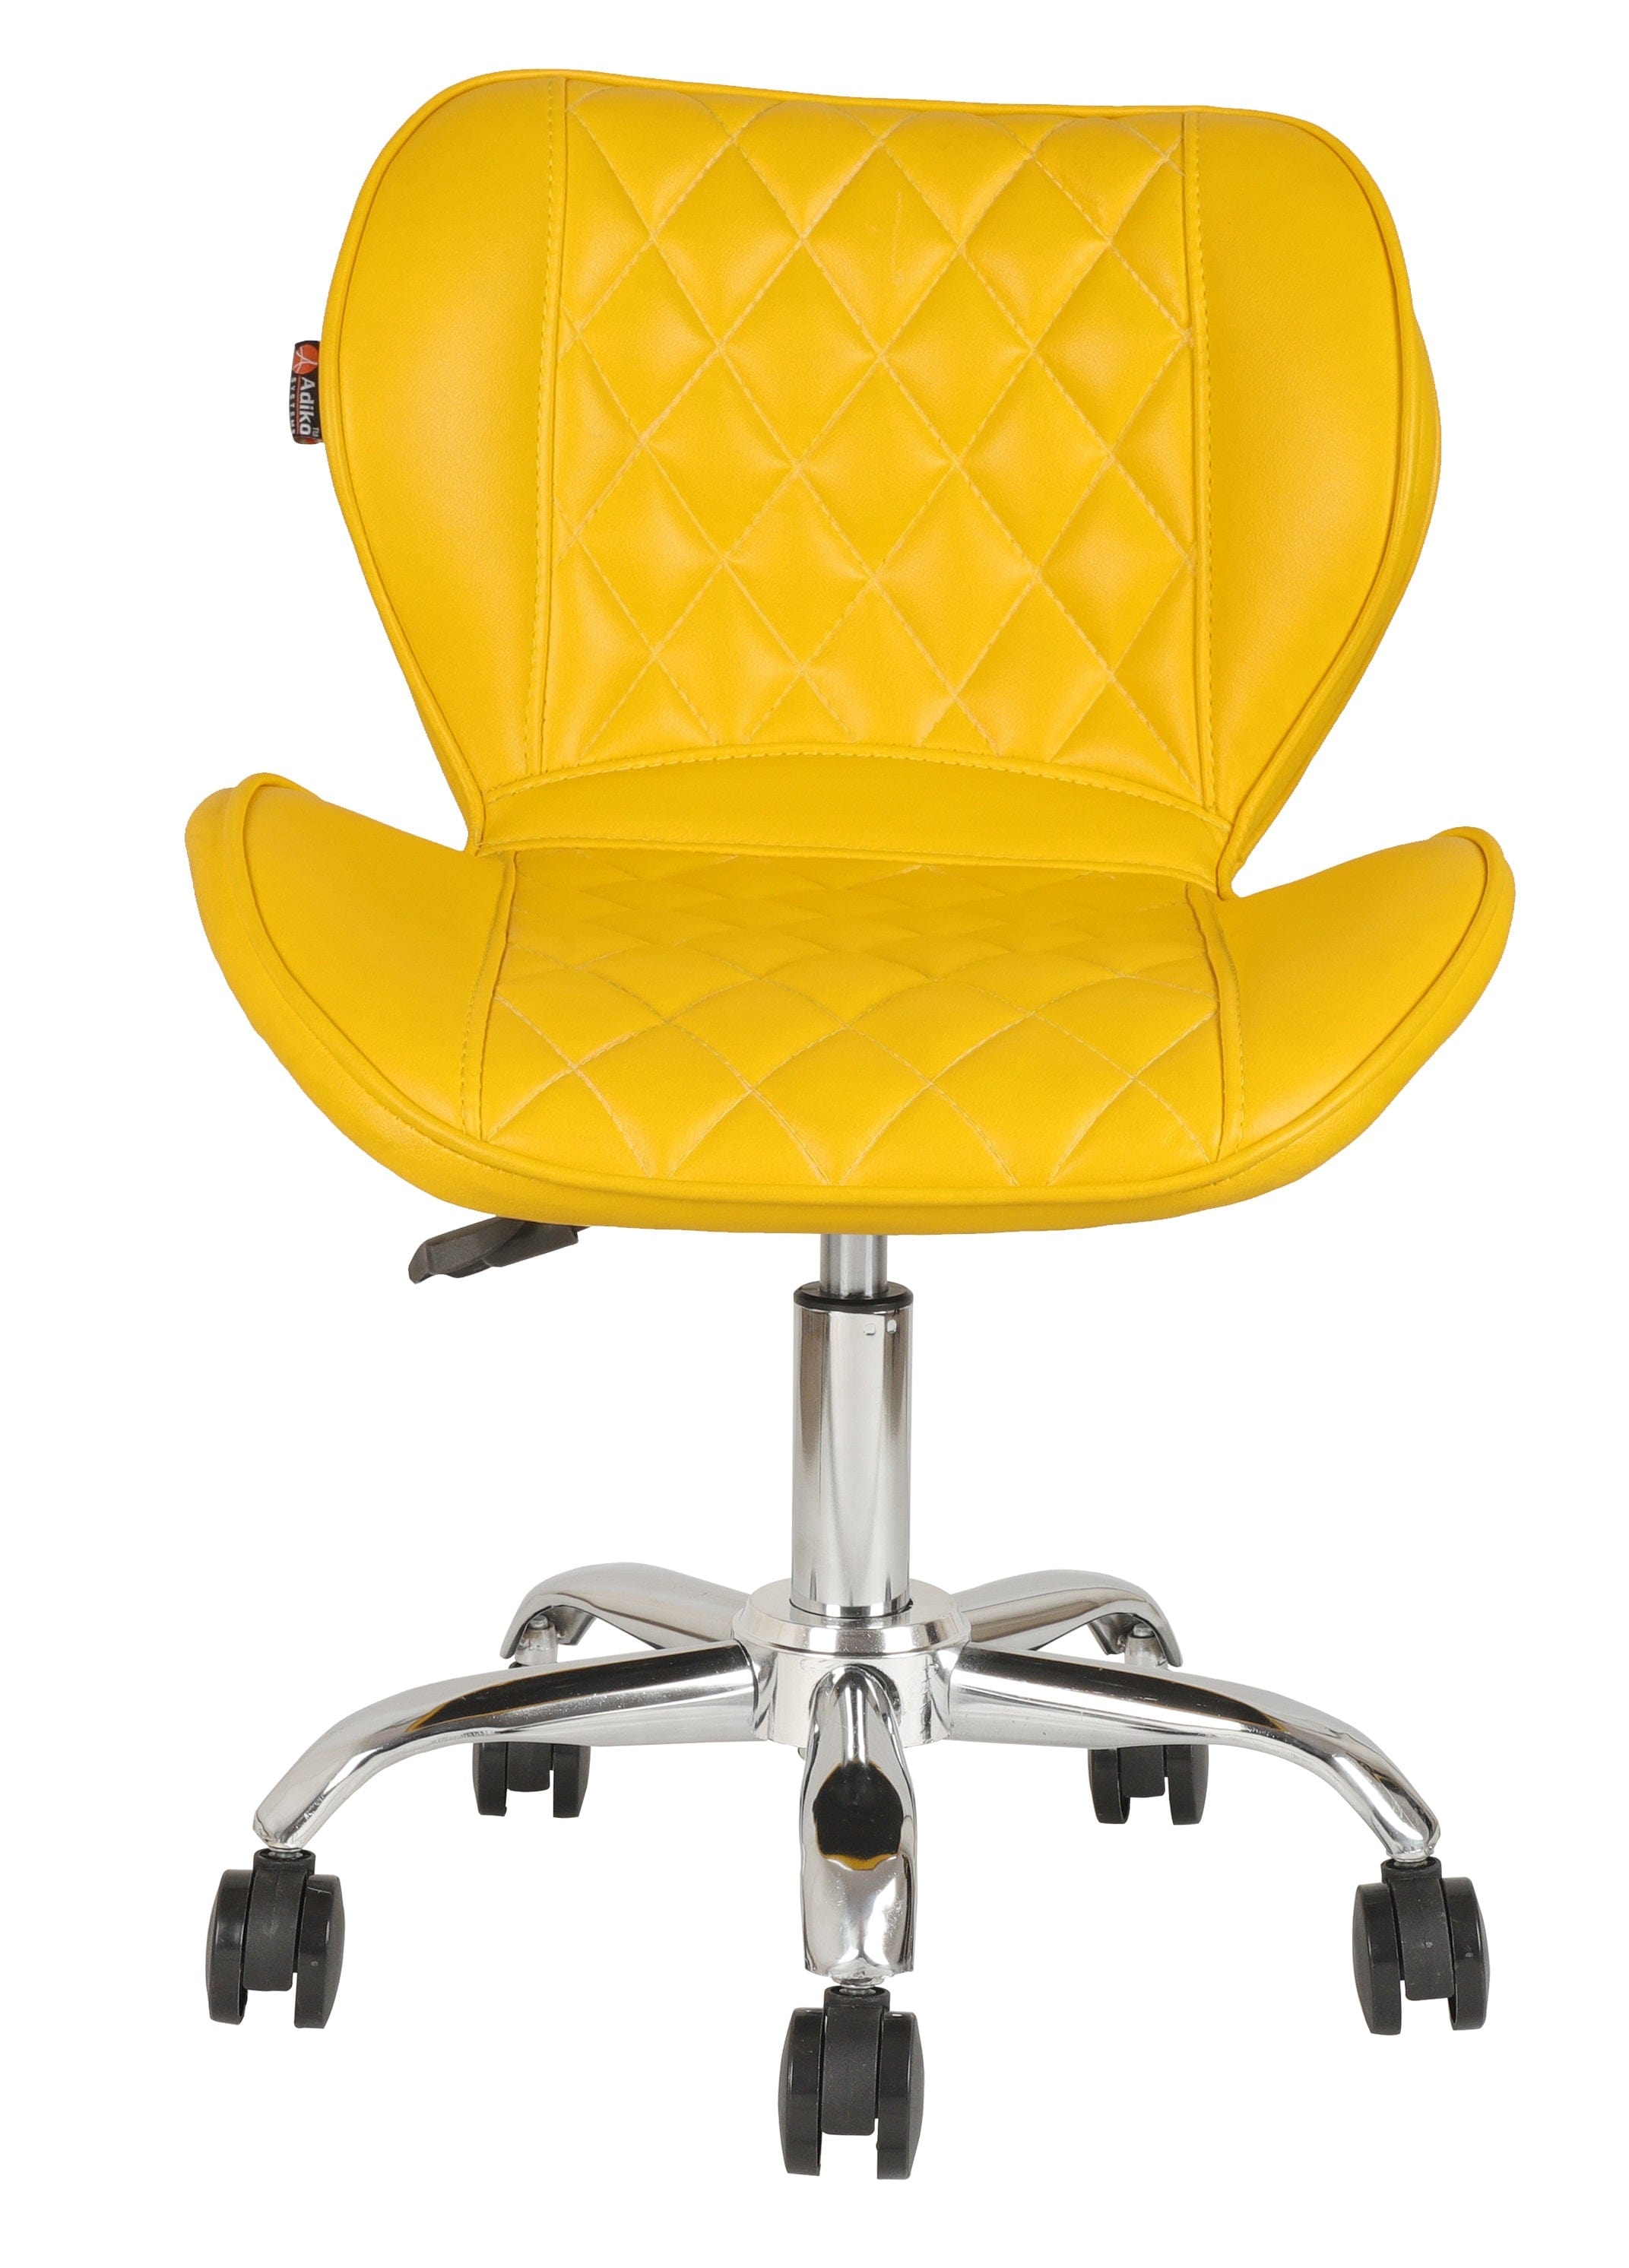 Adiko Flower Lounge Chair in Yellow